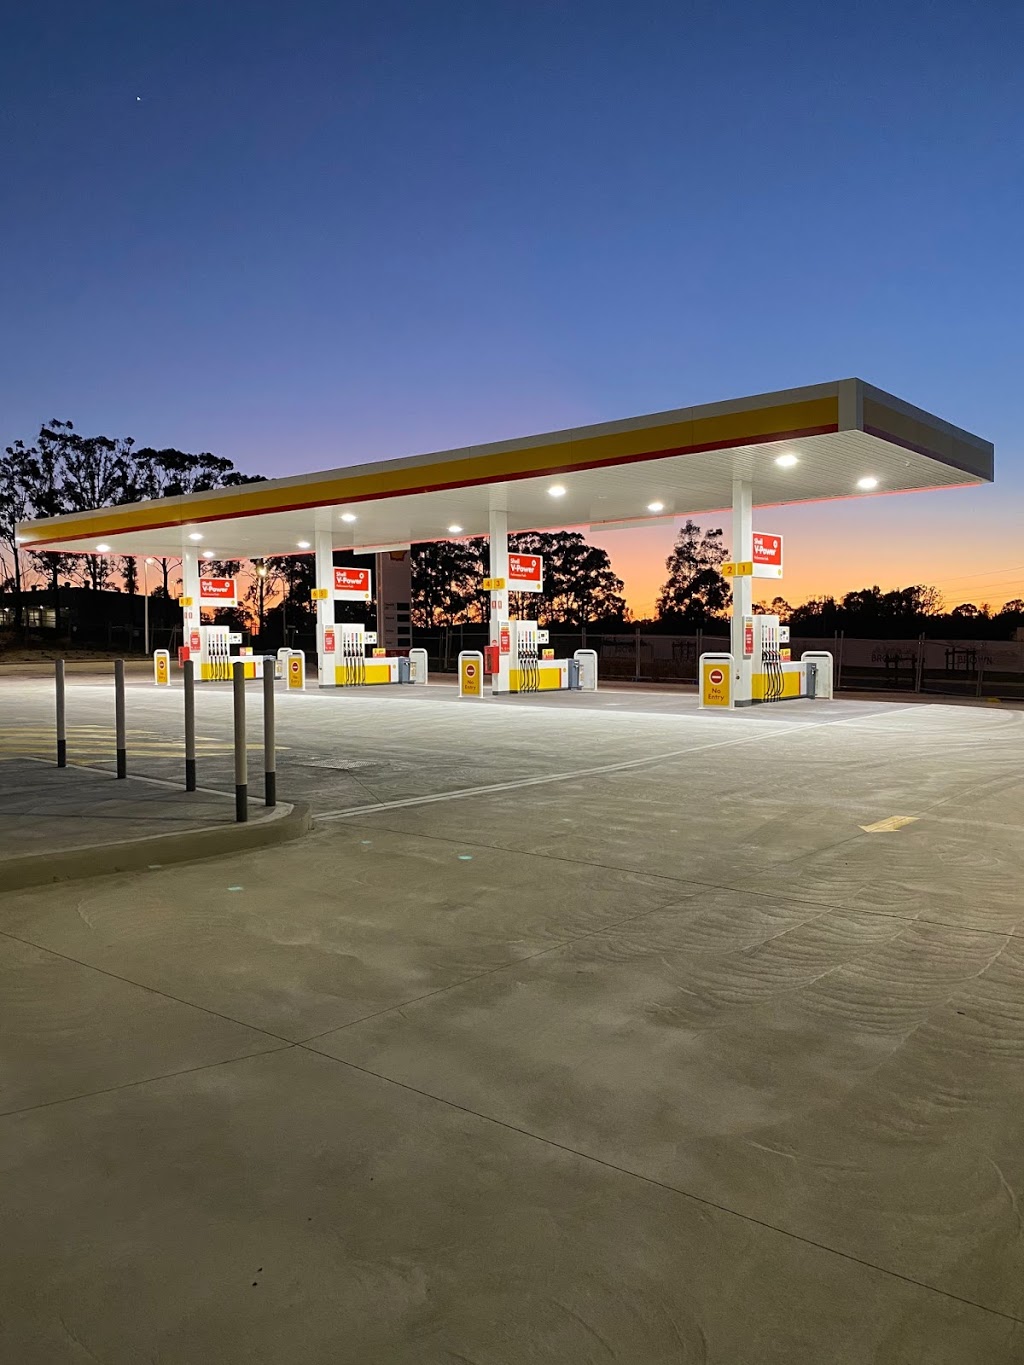 Shell Coles Express Beresfield | gas station | 93 Weakleys Dr, Beresfield NSW 2322, Australia | 0279049320 OR +61 2 7904 9320